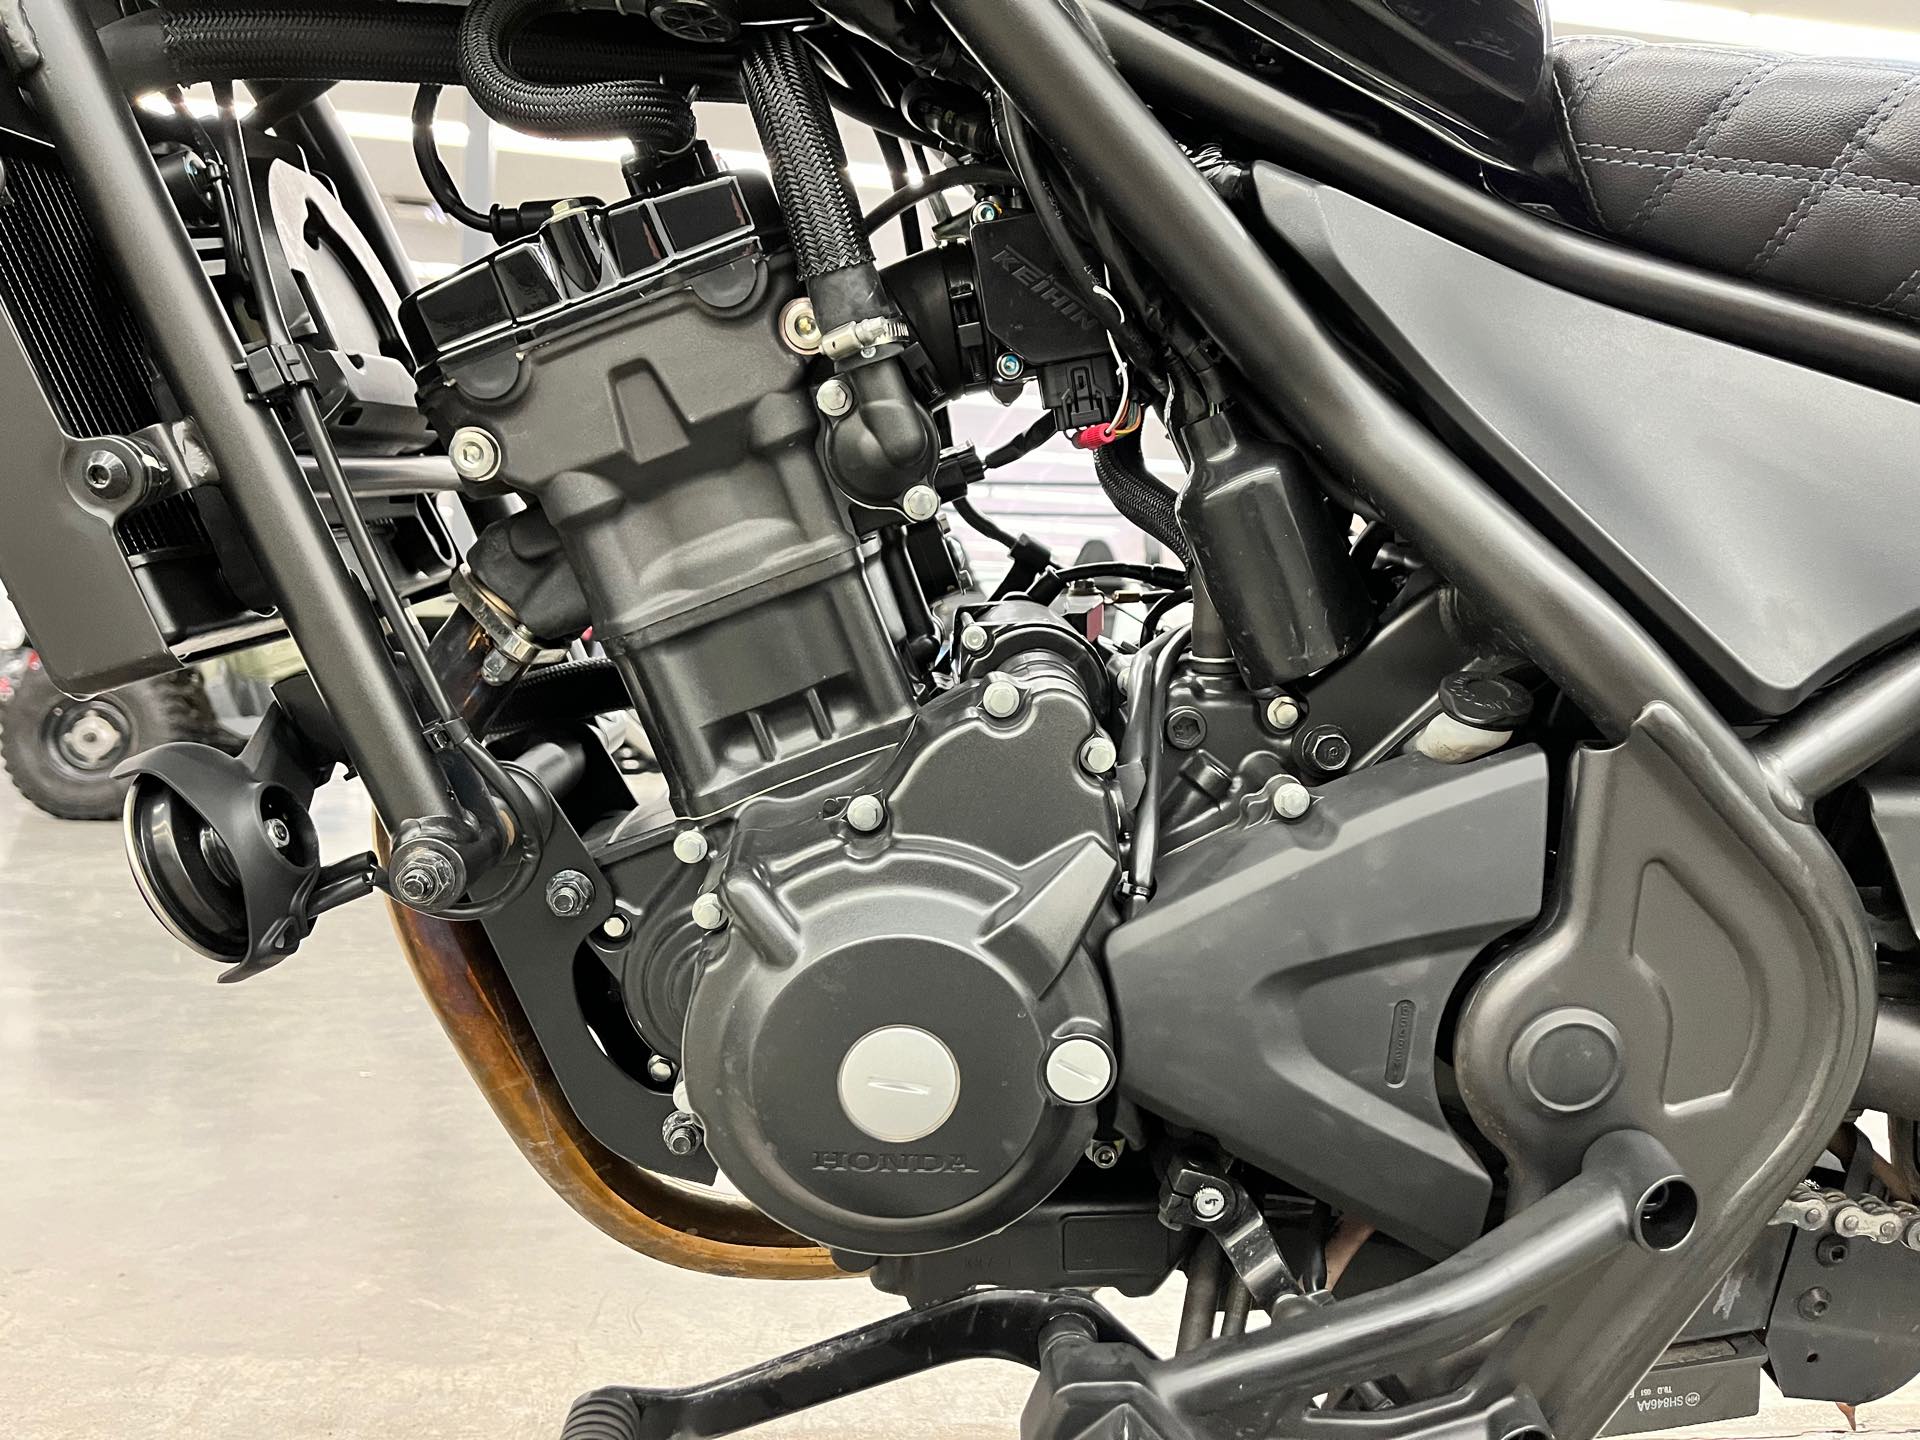 2020 Honda Rebel 300 ABS at Aces Motorcycles - Denver